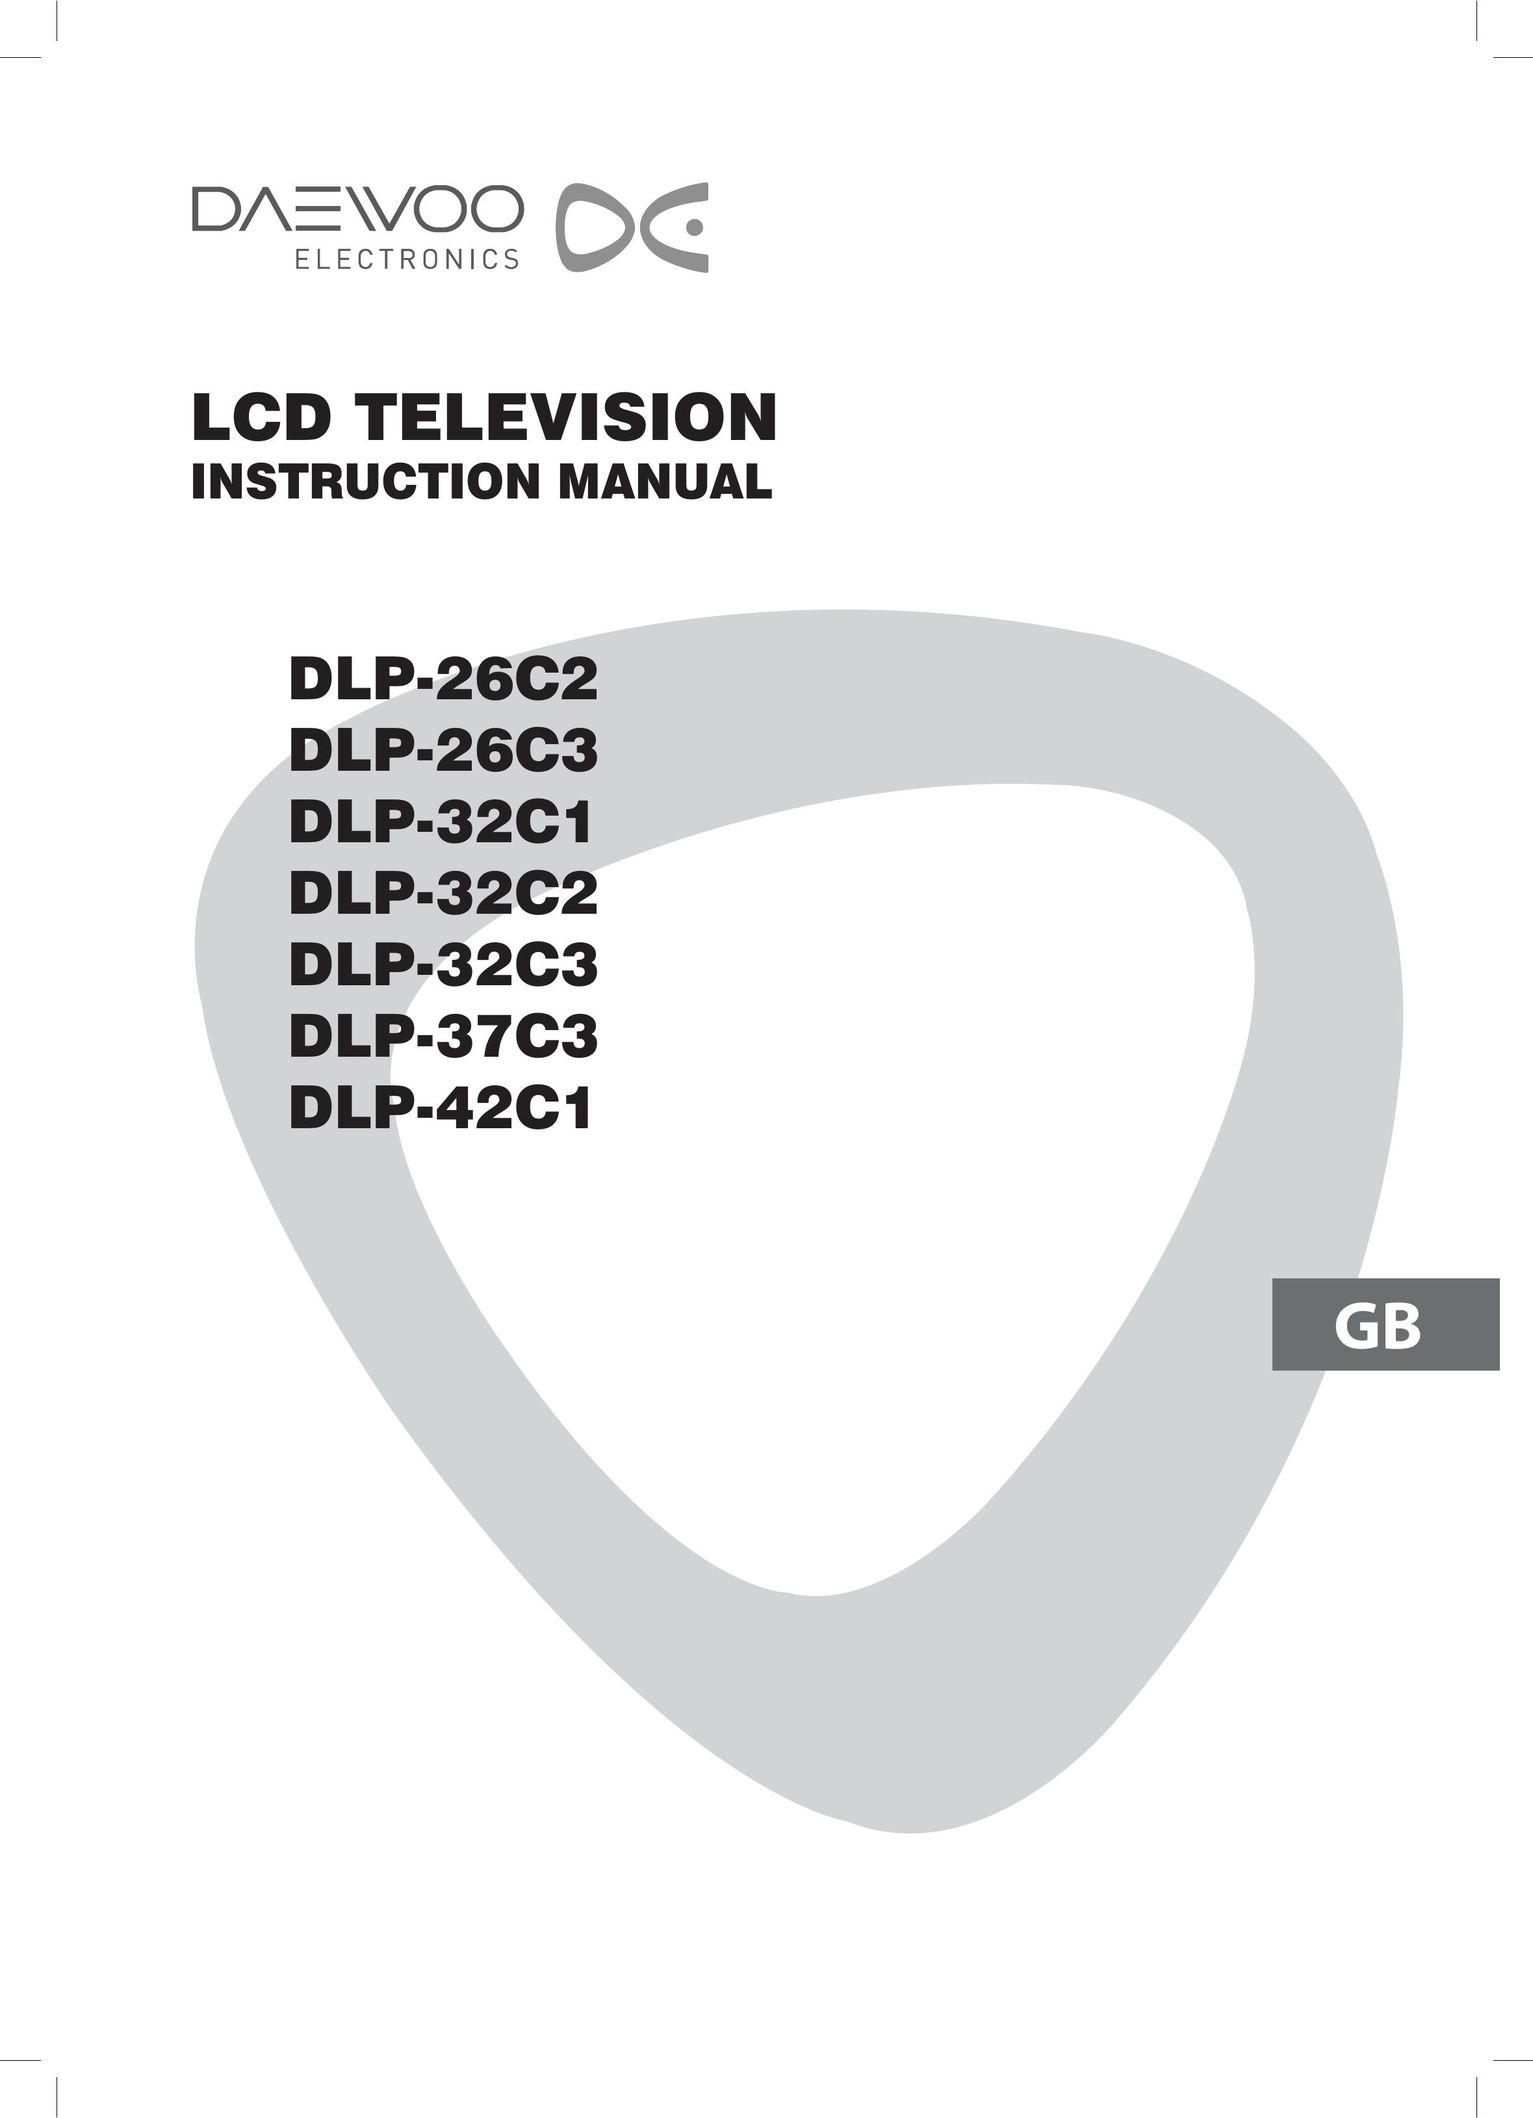 Daewoo DLP-26C2 Flat Panel Television User Manual